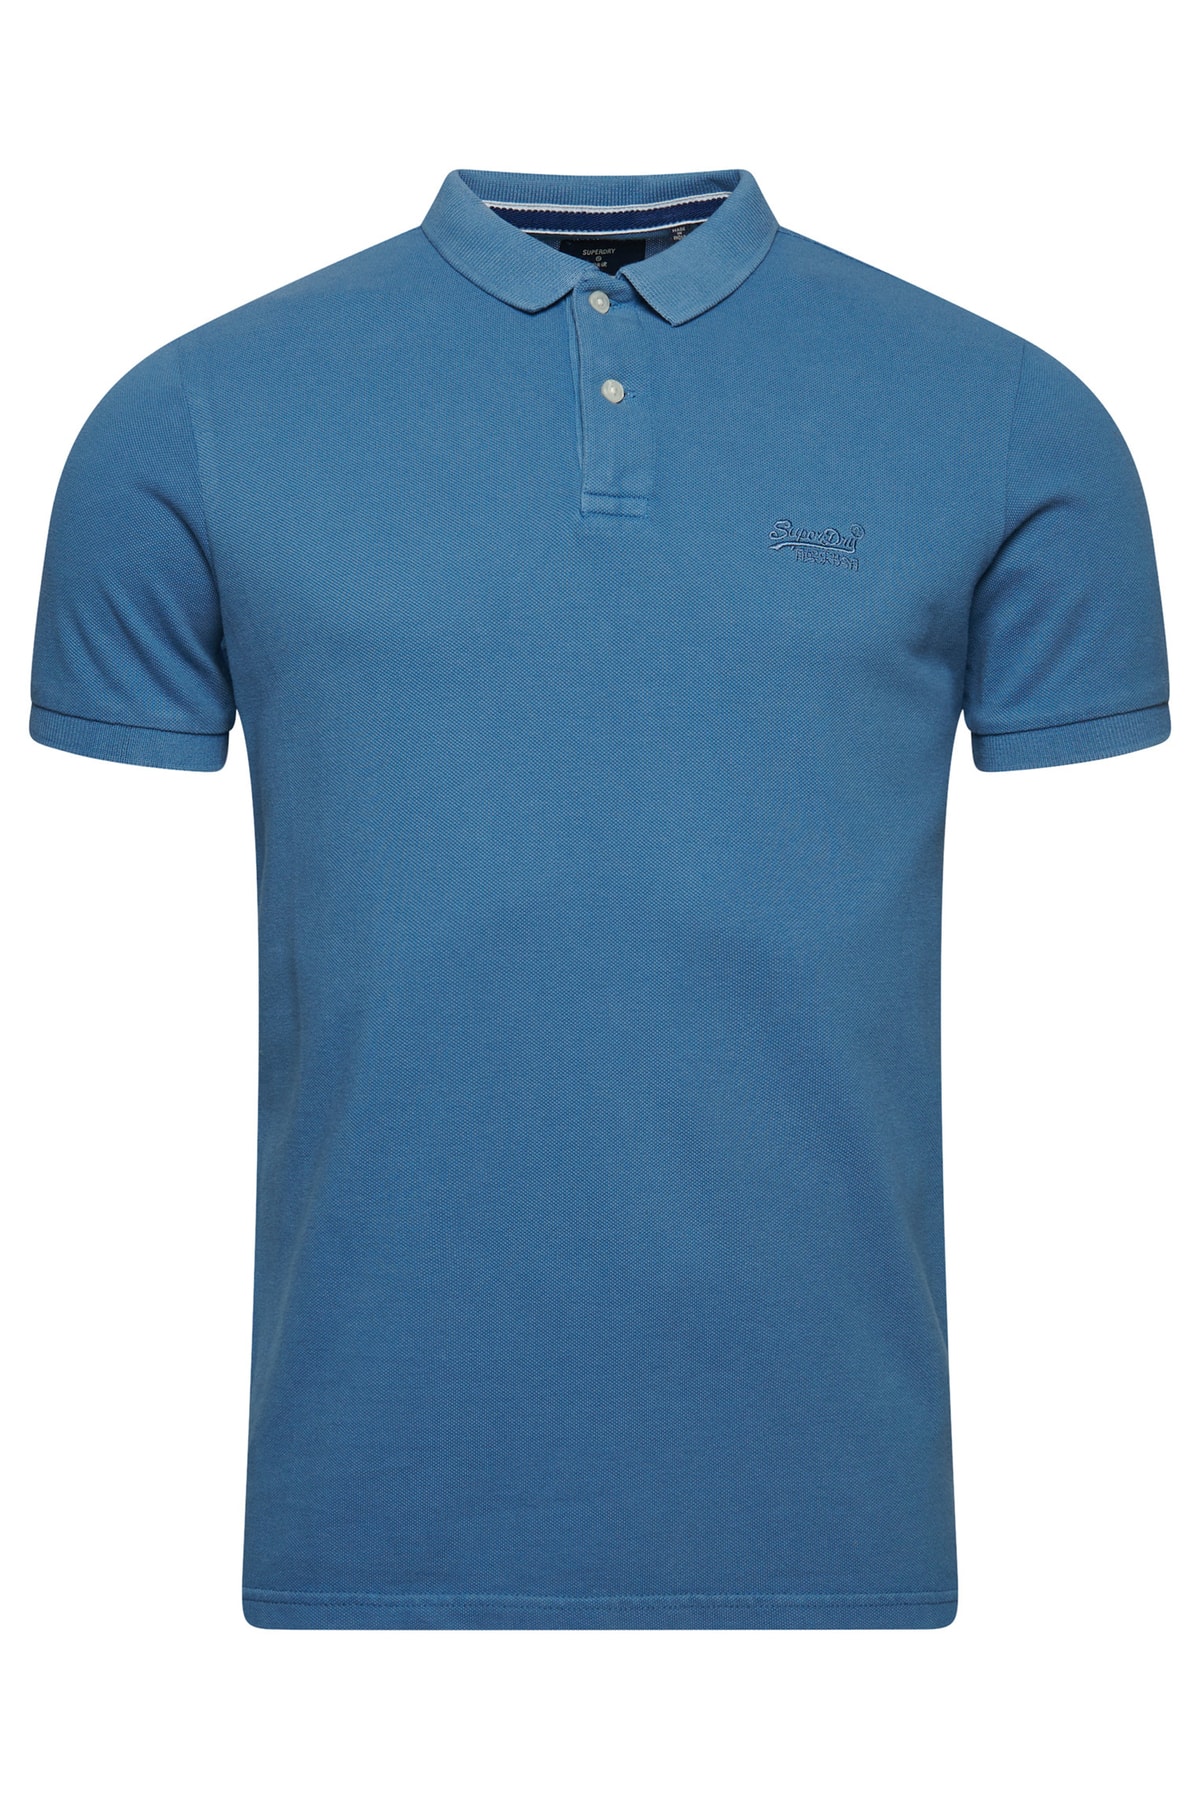 SUPERDRY Poloshirt Blau Regular Fit Fast ausverkauft